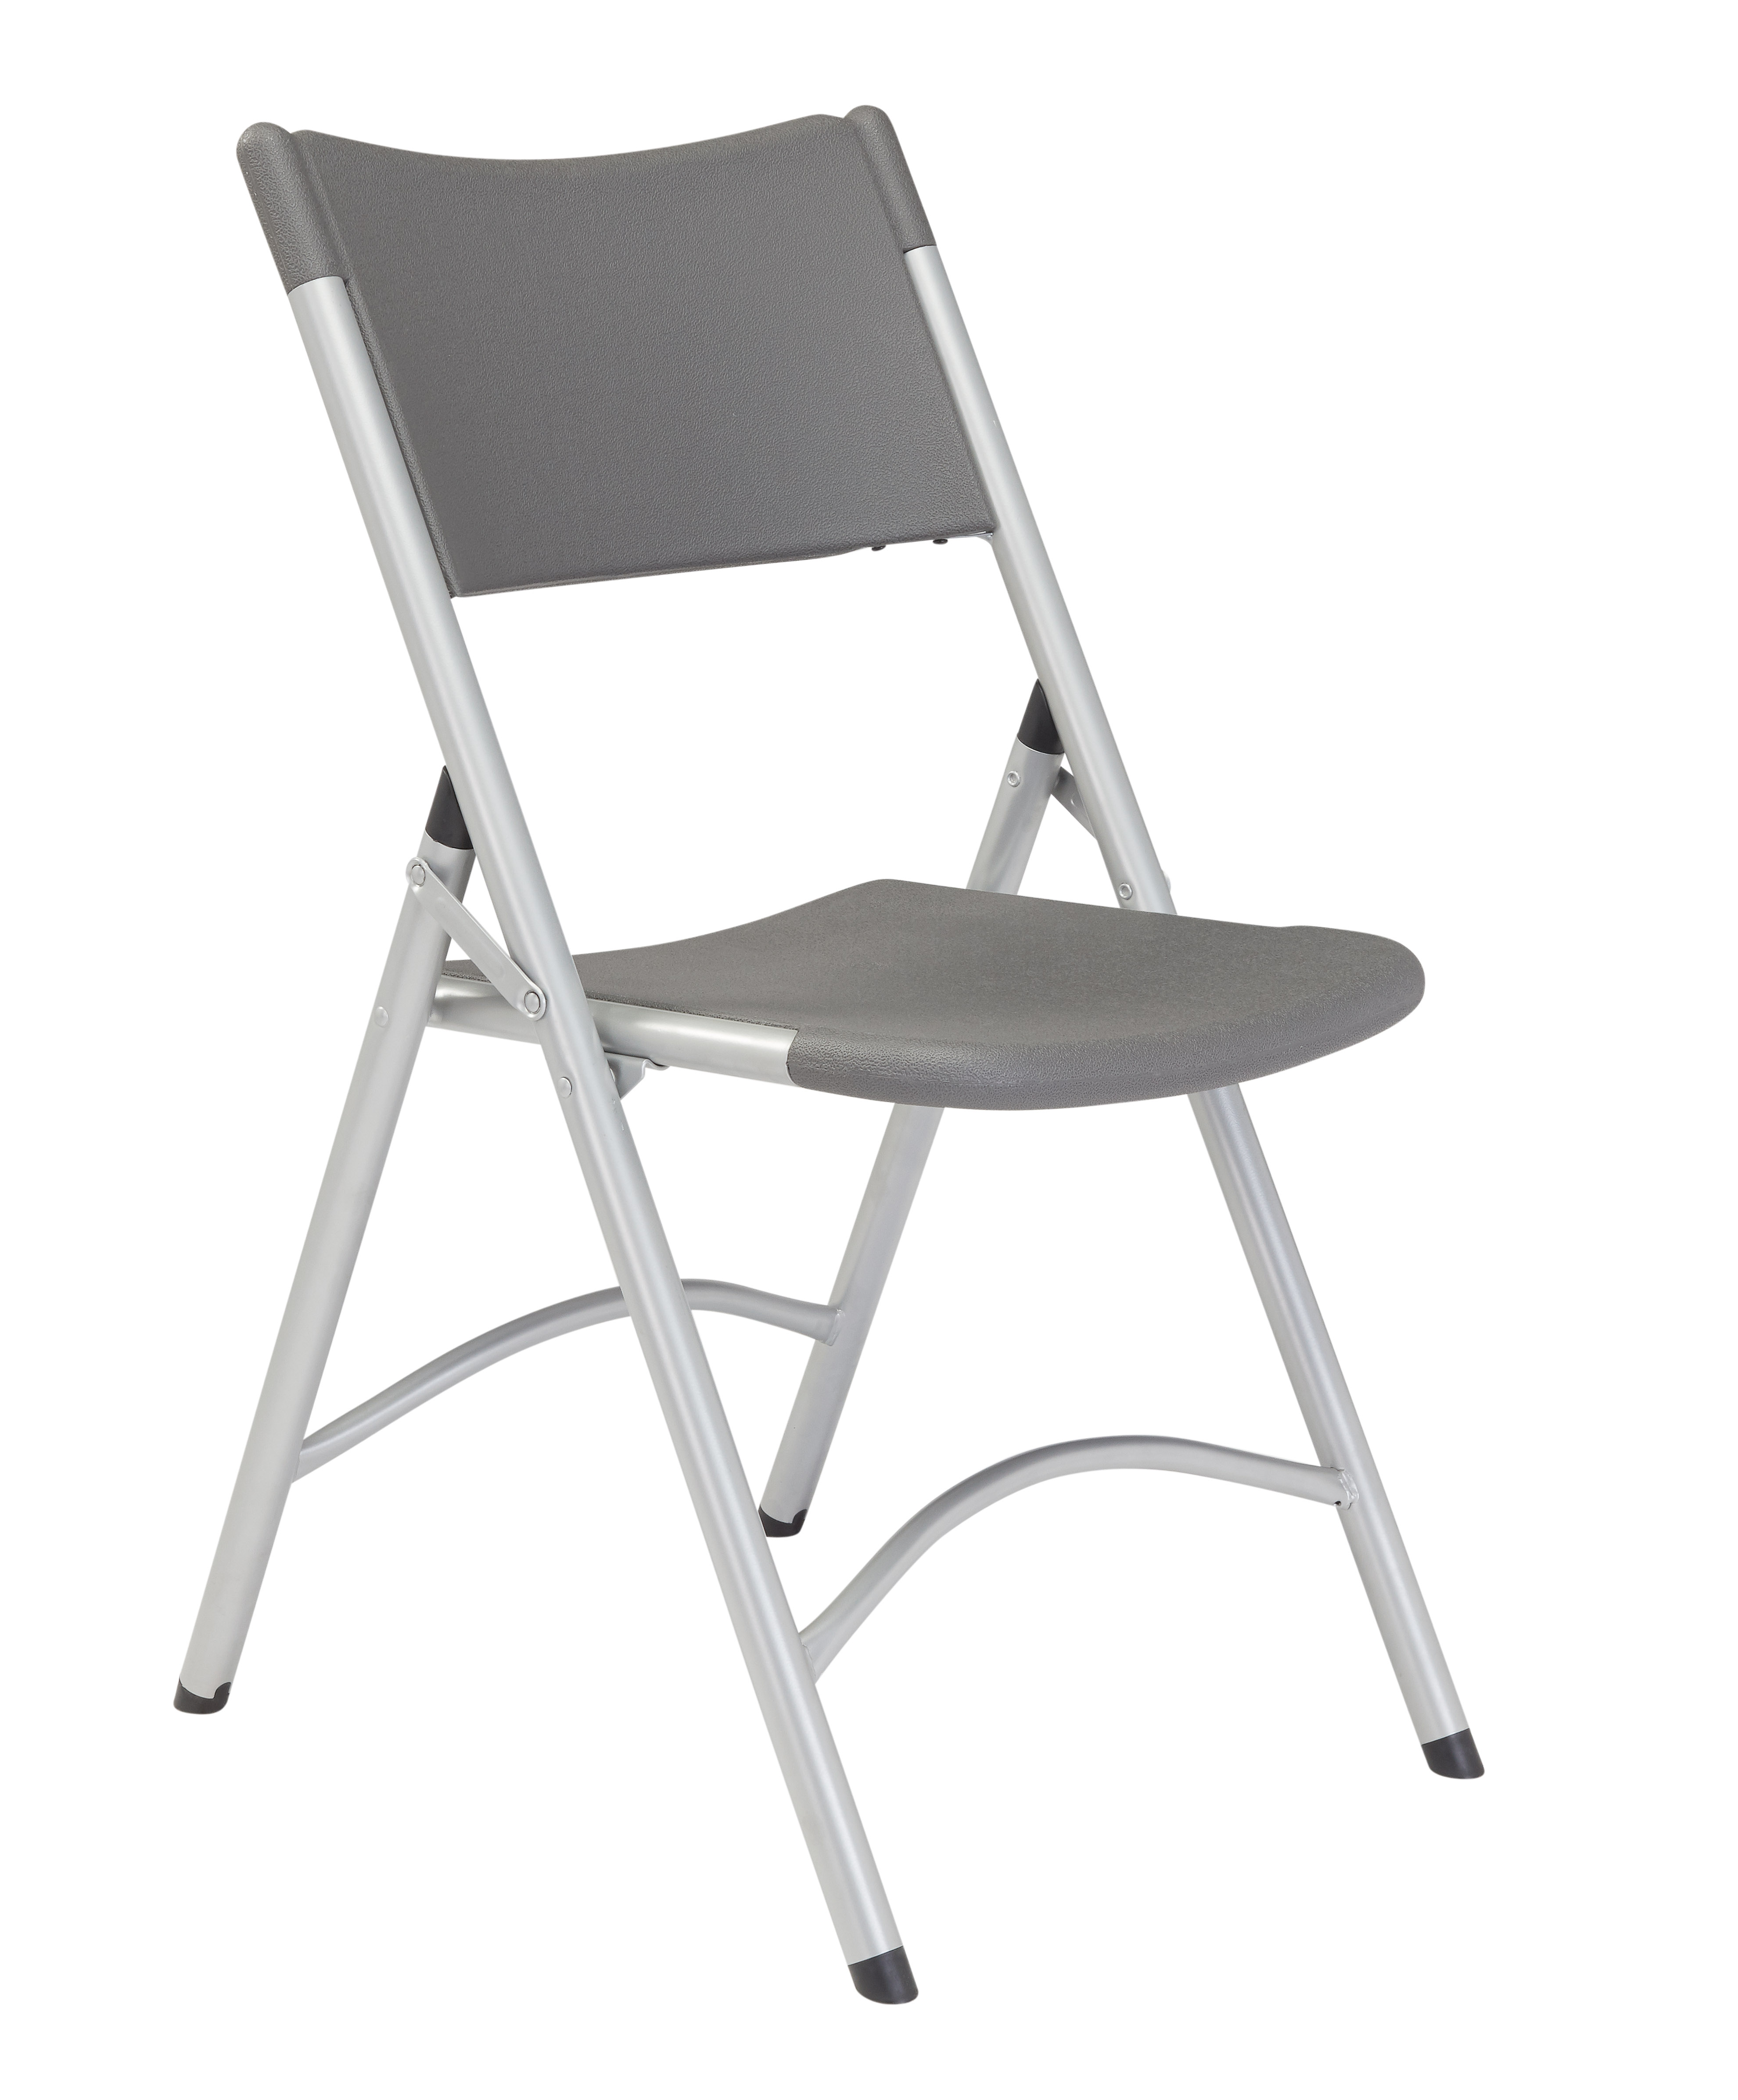 NPS 620 Blow Mold Folding Chair, Charcoal Slate